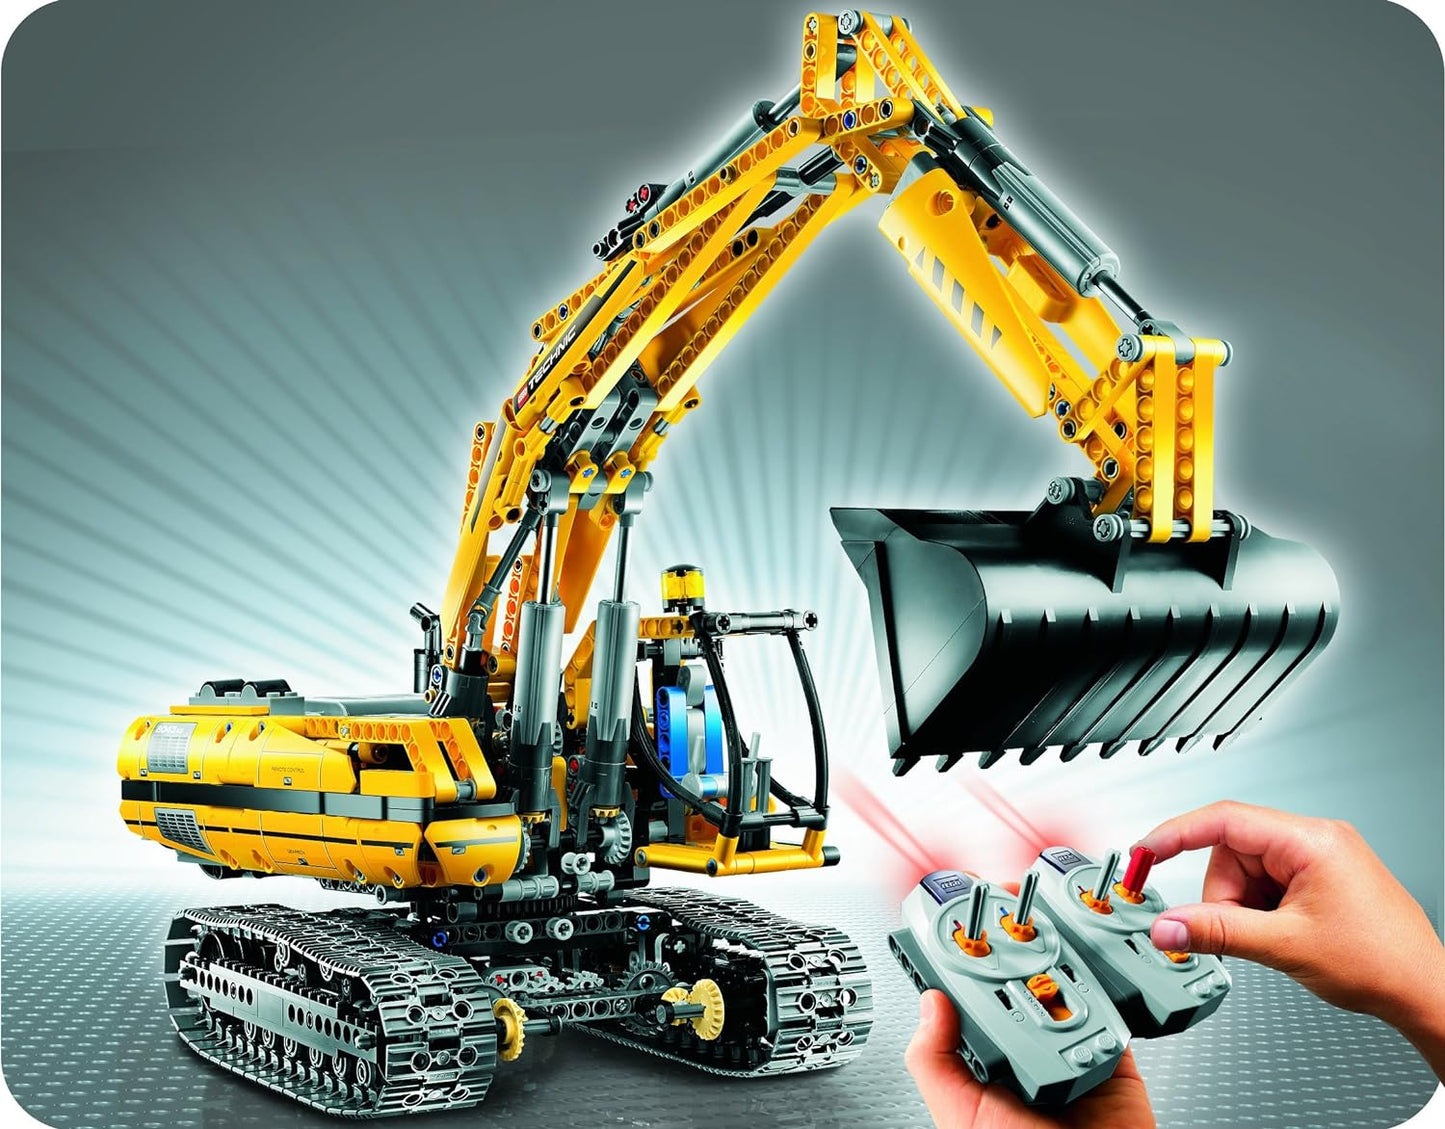 LEGO Technic 8043 Power Functions Motorized Excavator